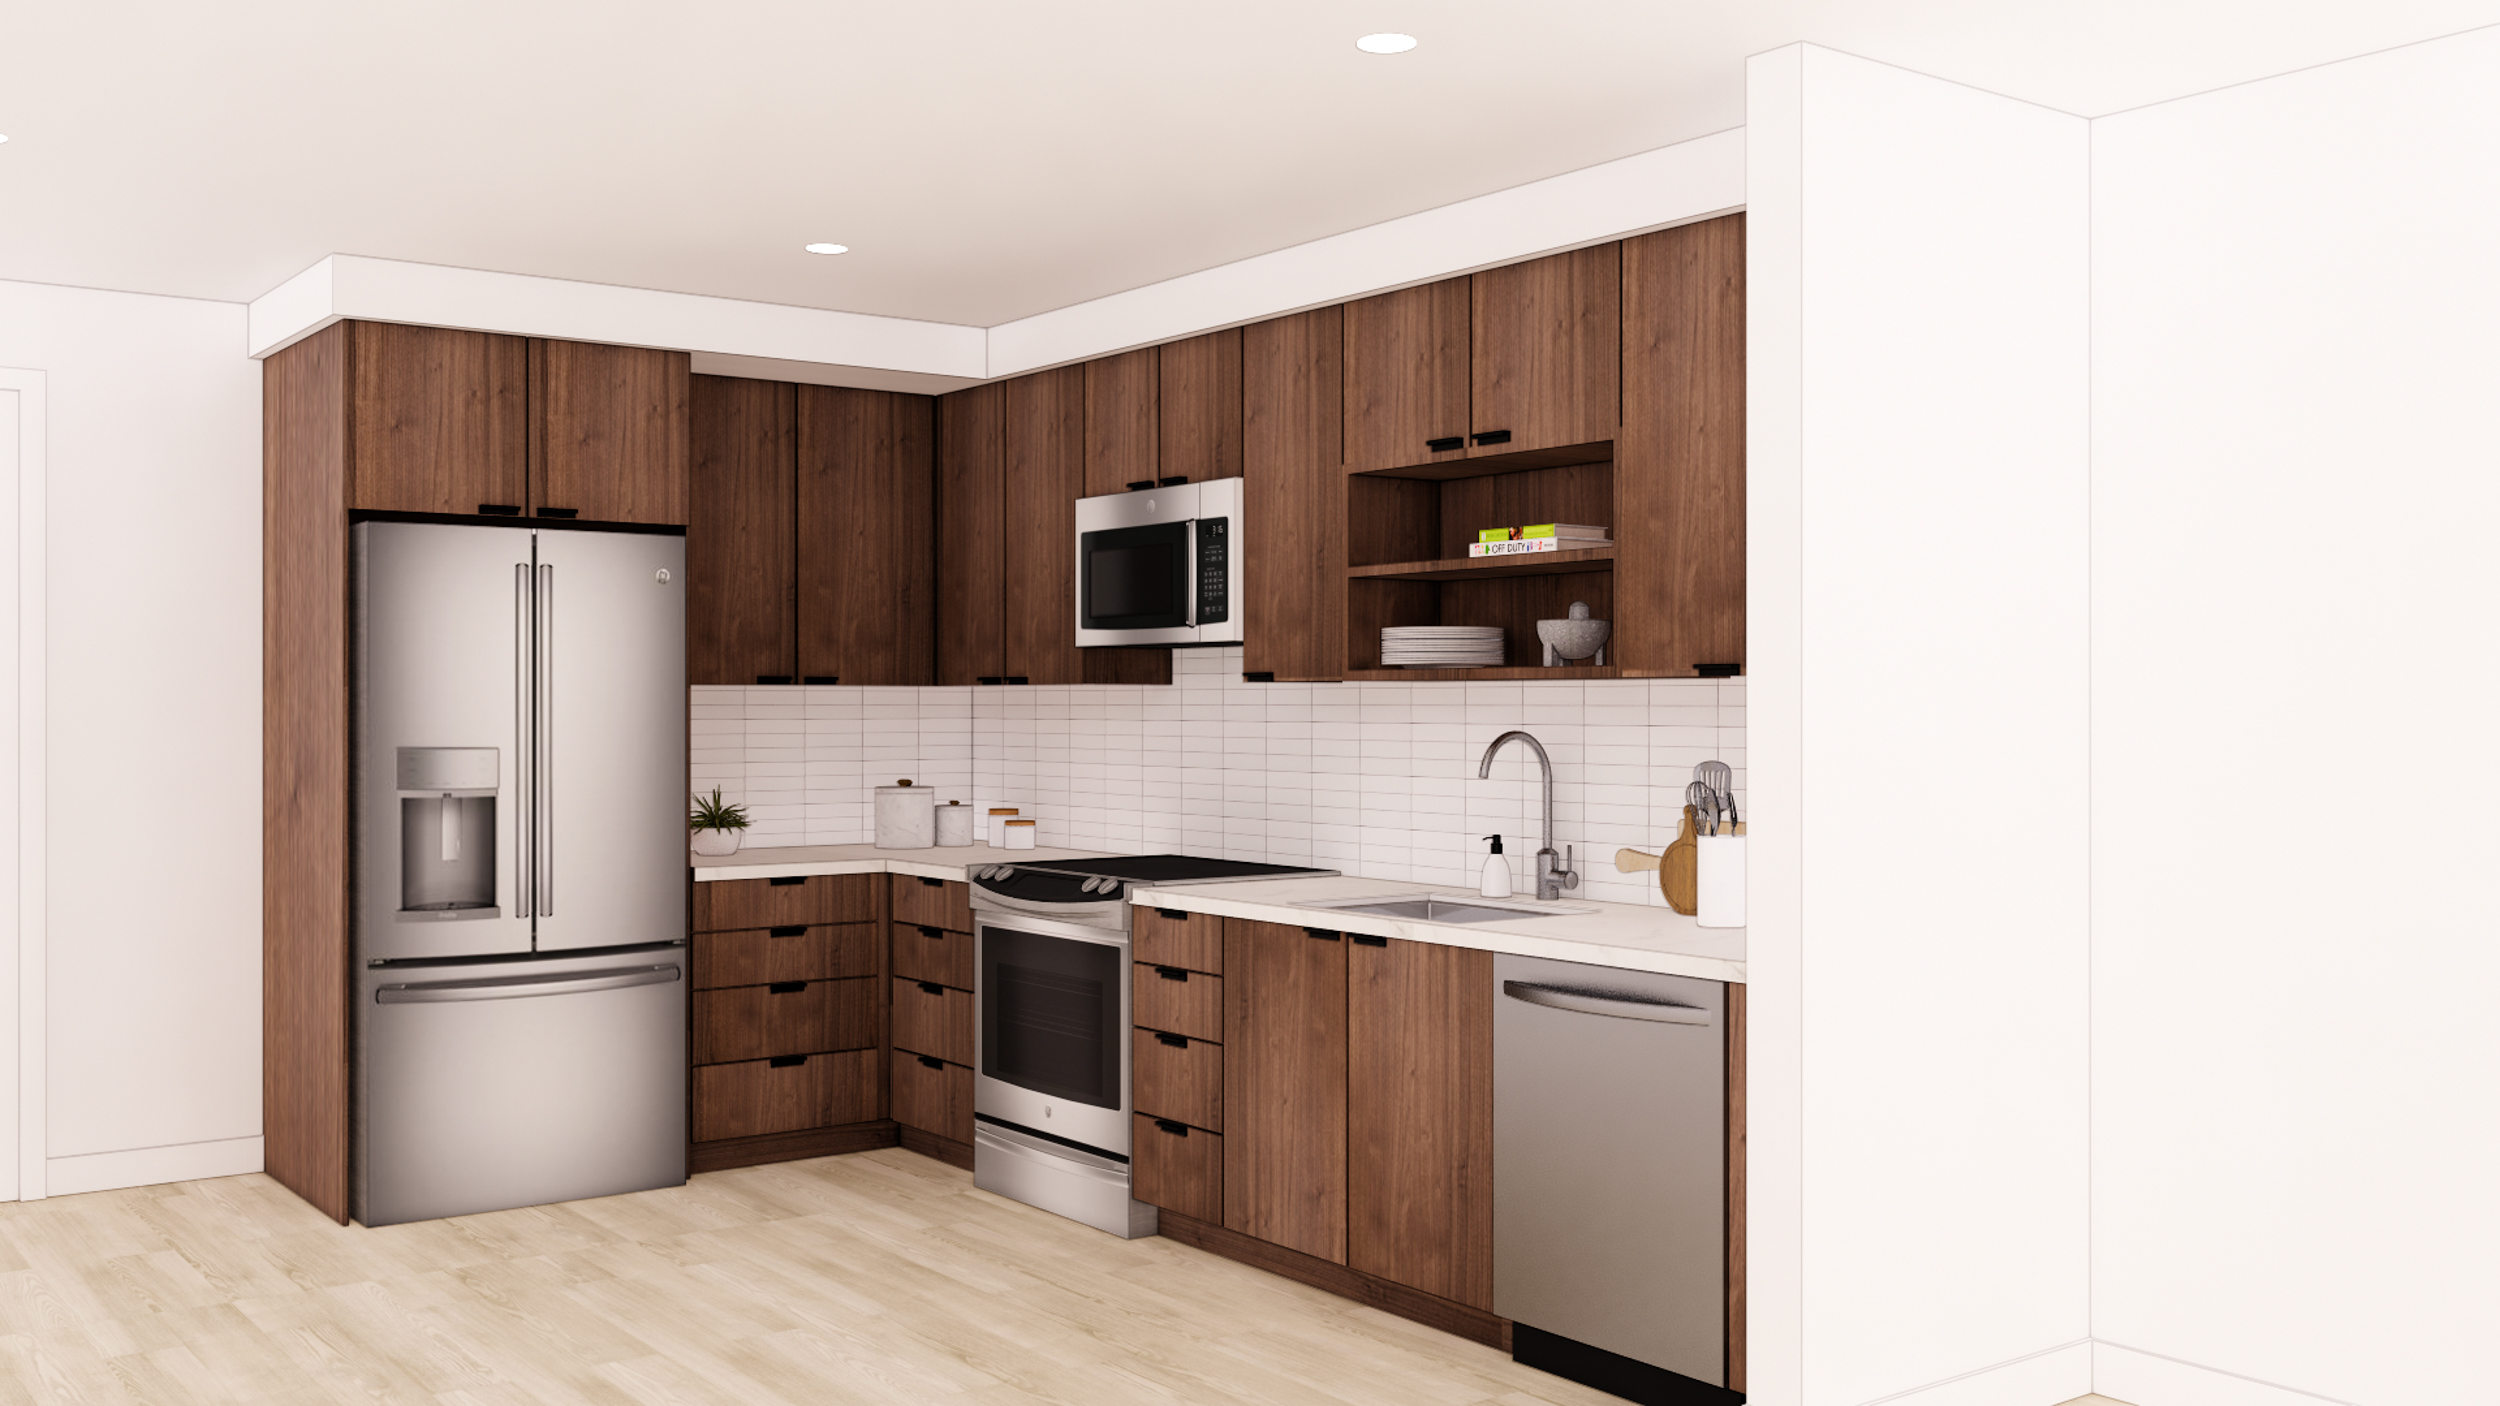 100 Callan Street apartment interior, rendering via project website